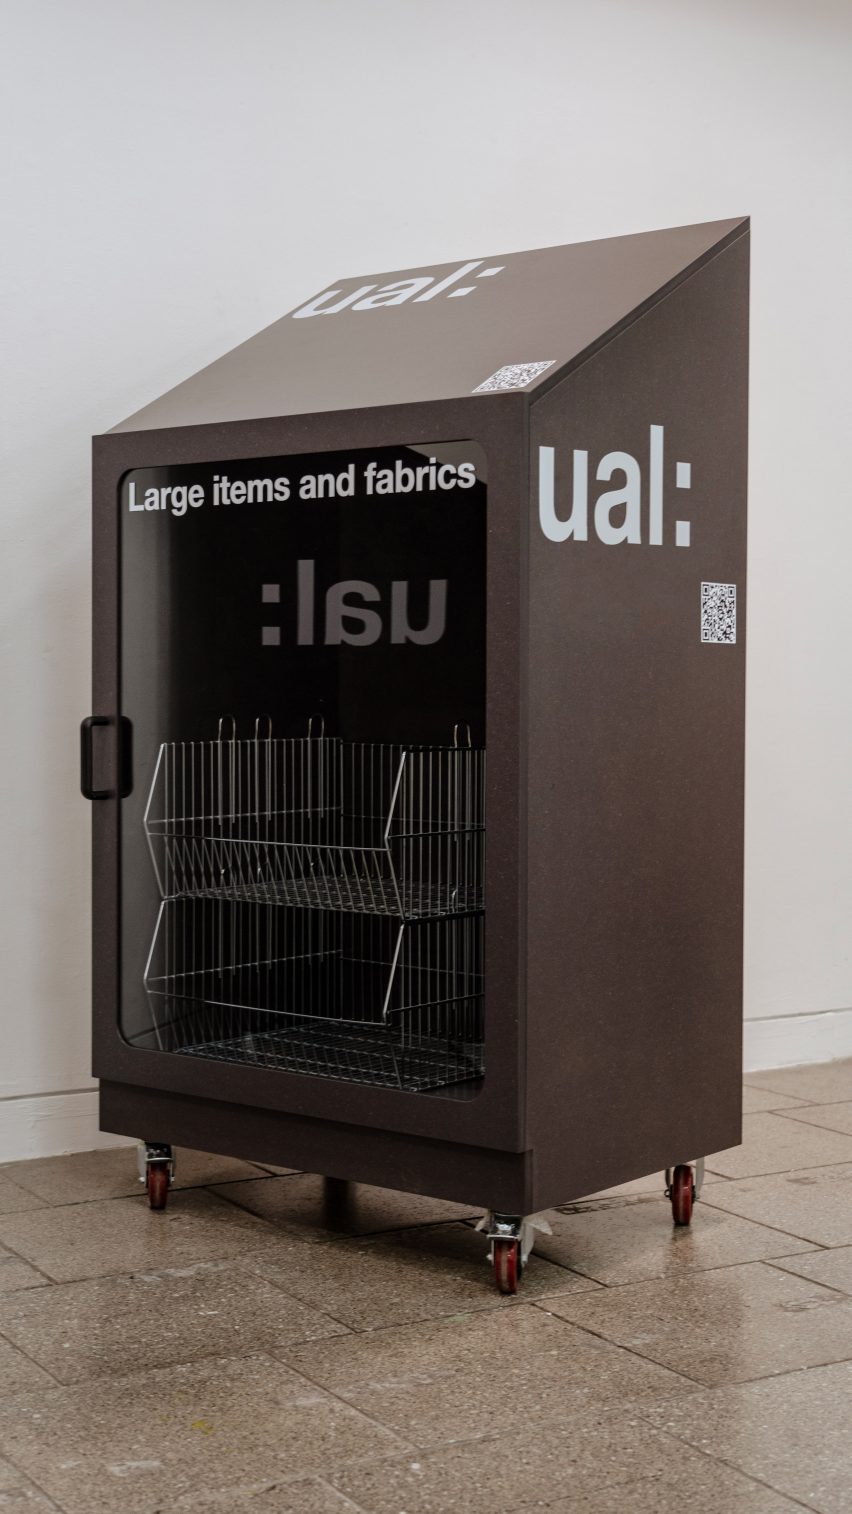 University of the Arts London (UAL) Large Items and Fabrics Donation Box